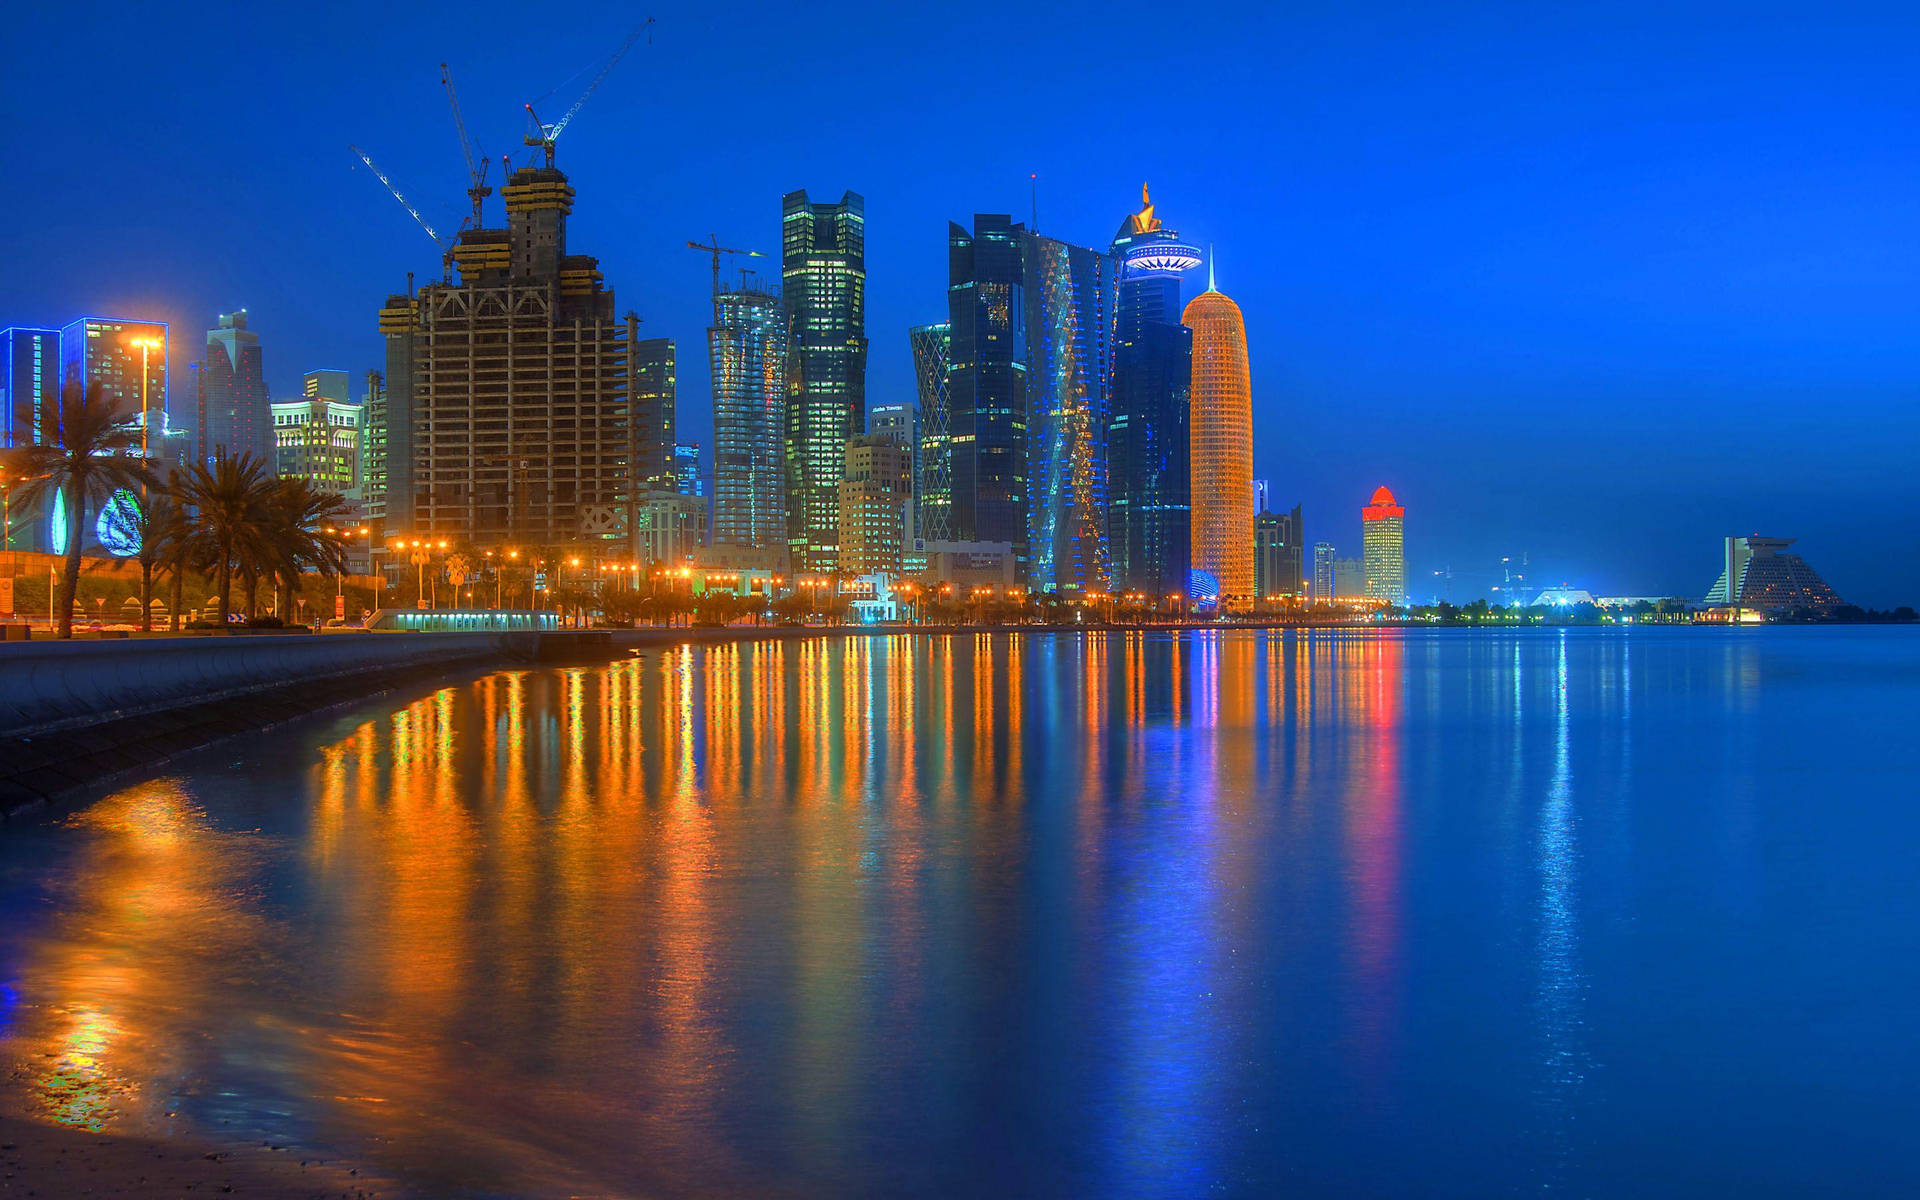 Qatar's Doha Corniche Background